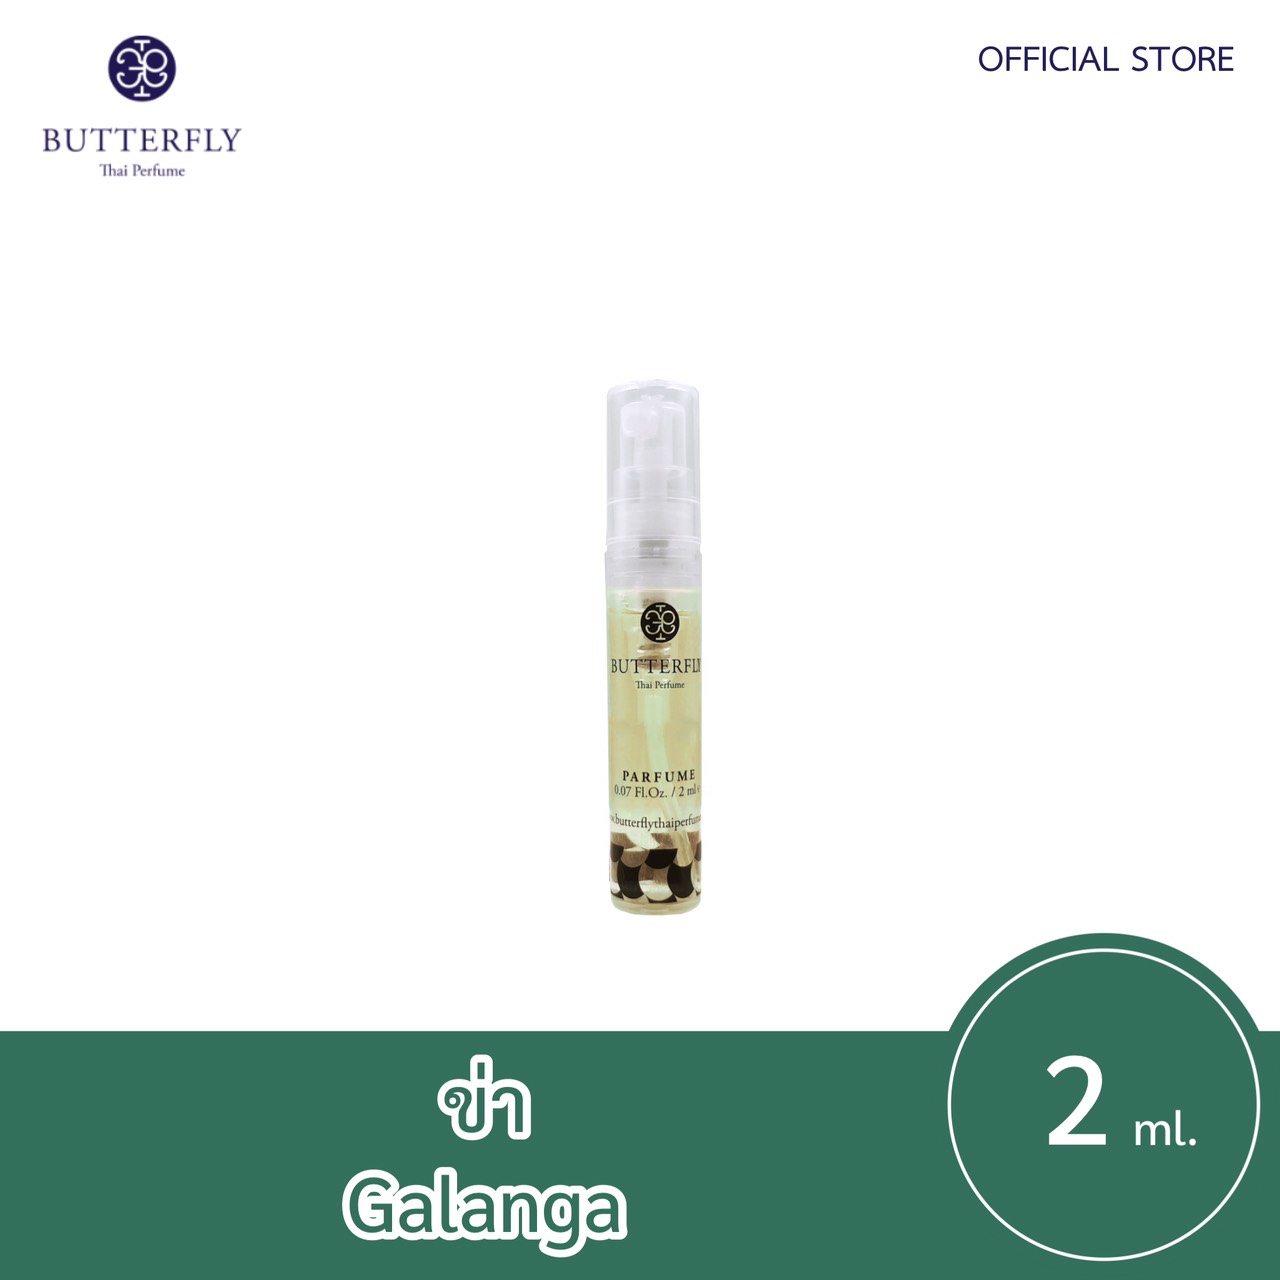 Butterfly Thai Perfume - น้ำหอมบัตเตอร์ฟลาย ไทย เพอร์ฟูม  ขนาดทดลอง 2ml.  กลิ่น ข่าปริมาณ (มล.) 2